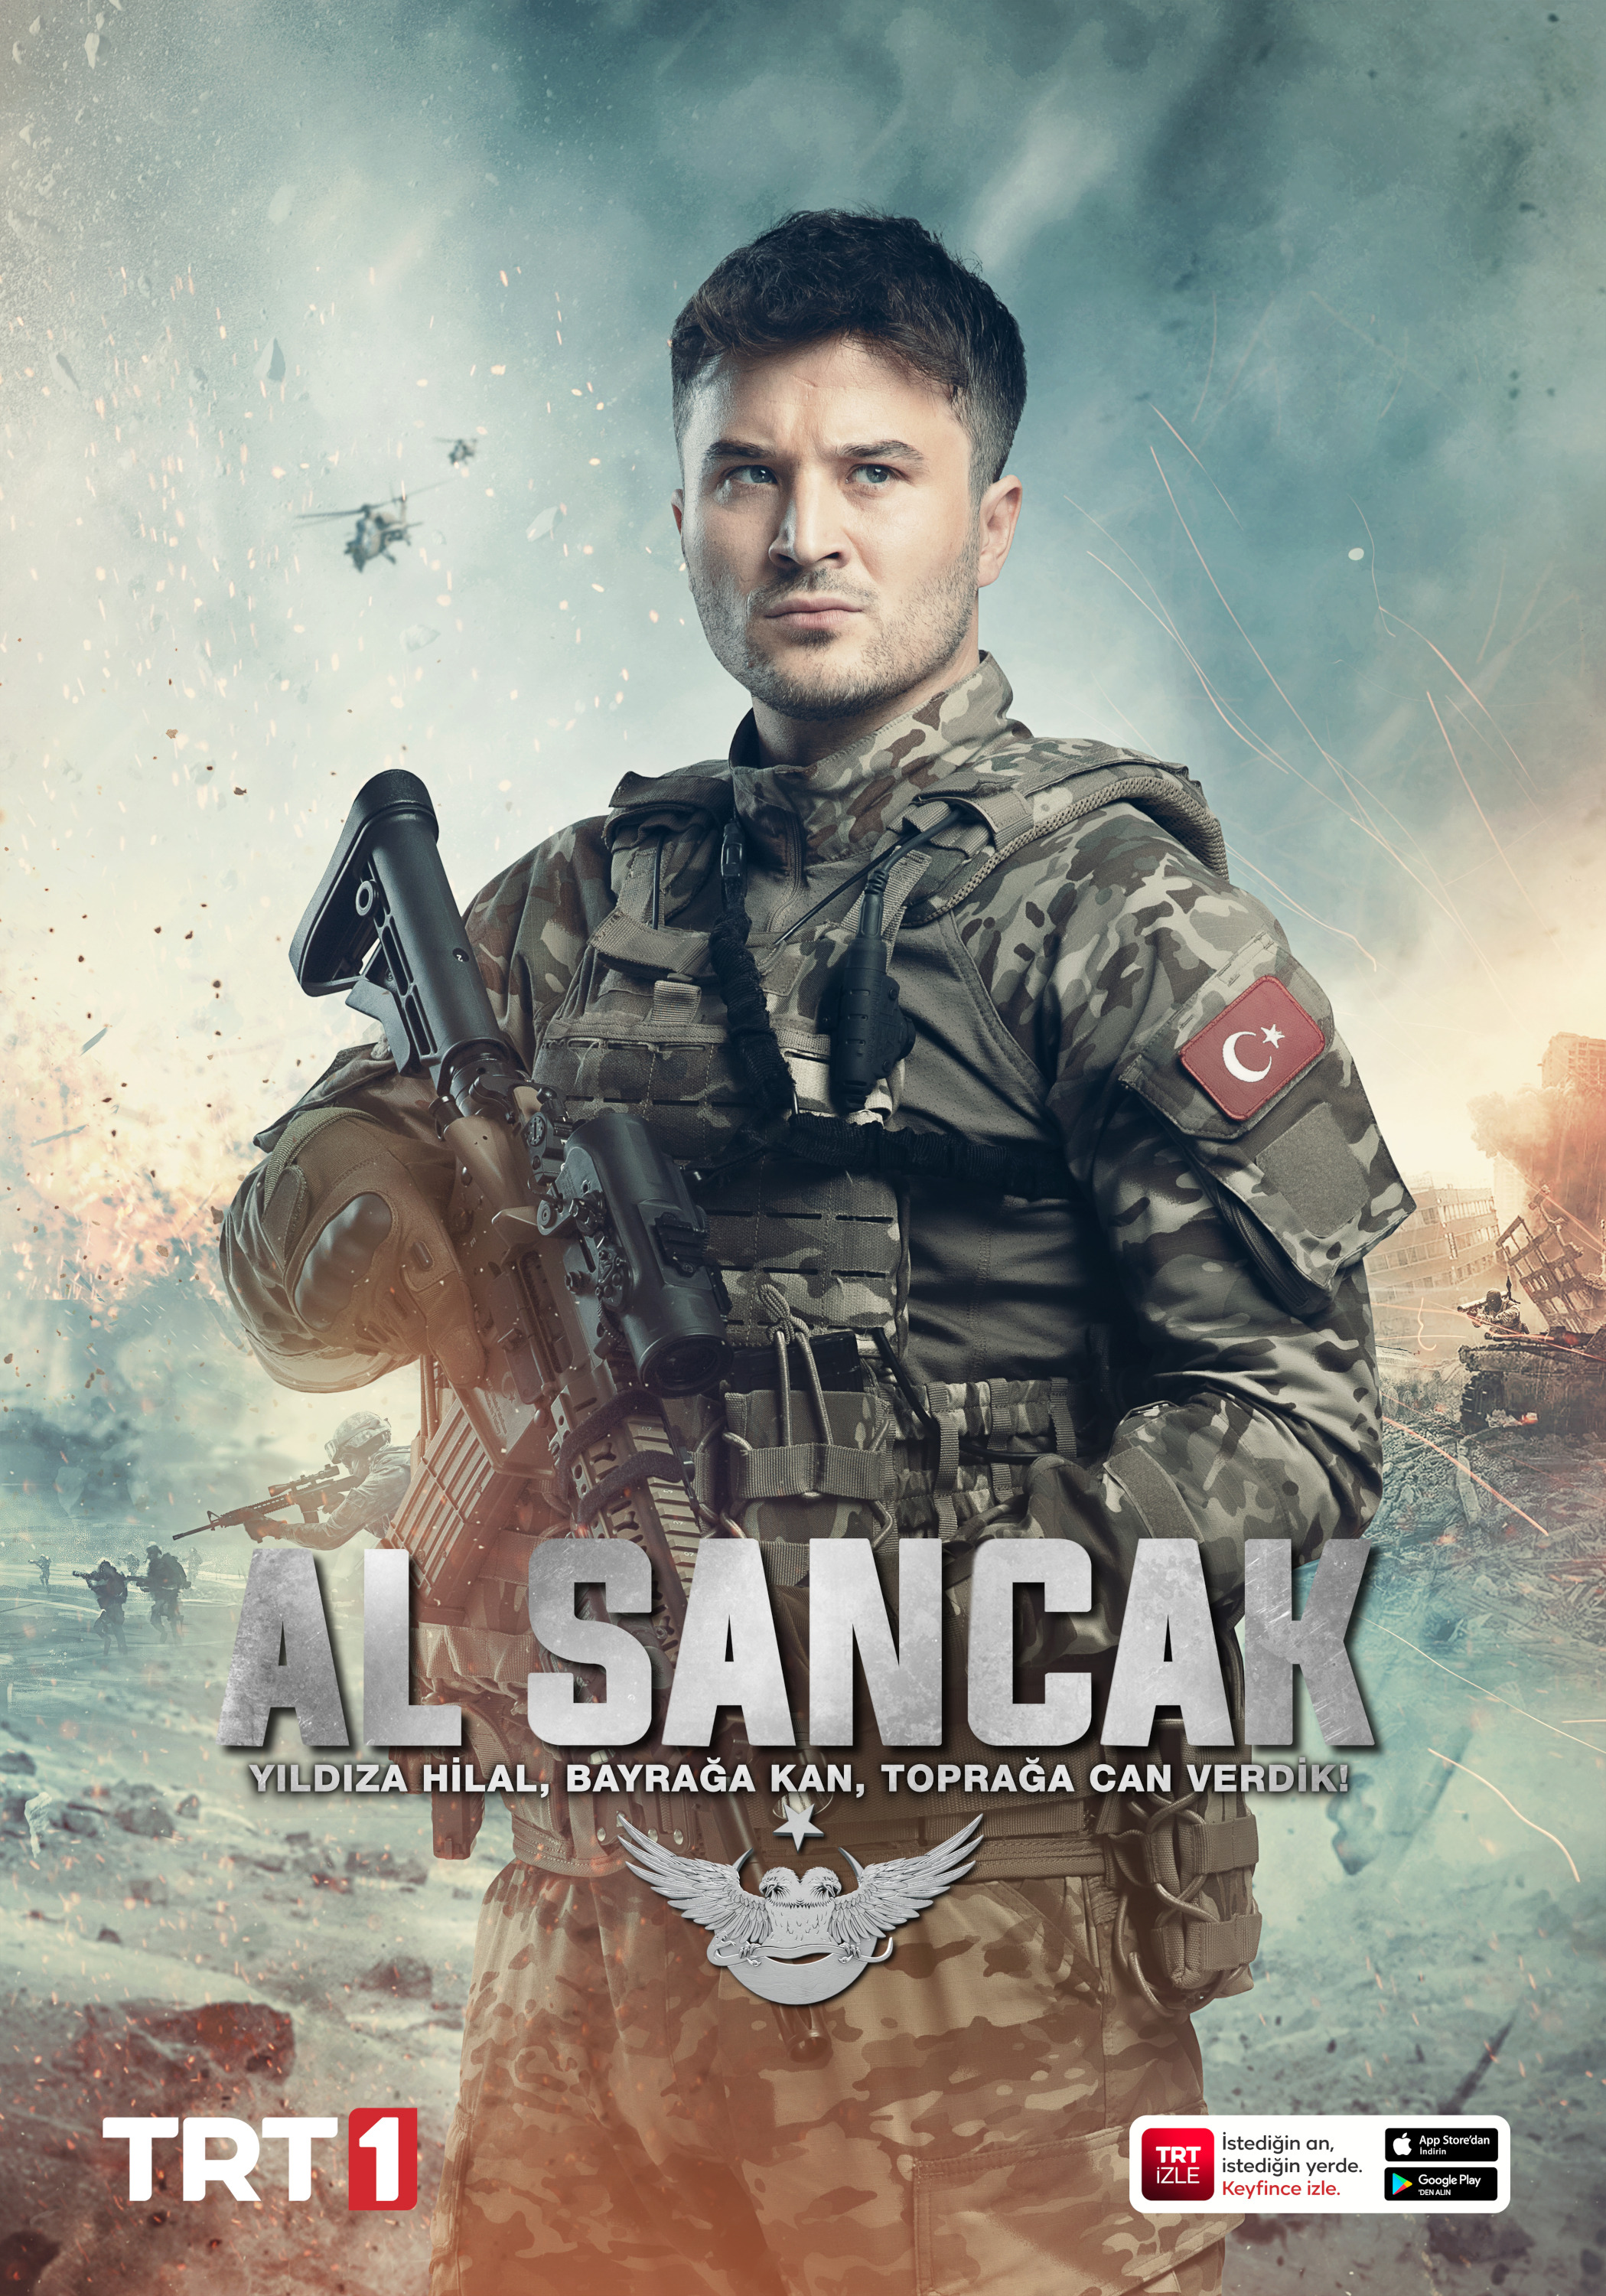 Mega Sized TV Poster Image for Al Sancak (#16 of 20)